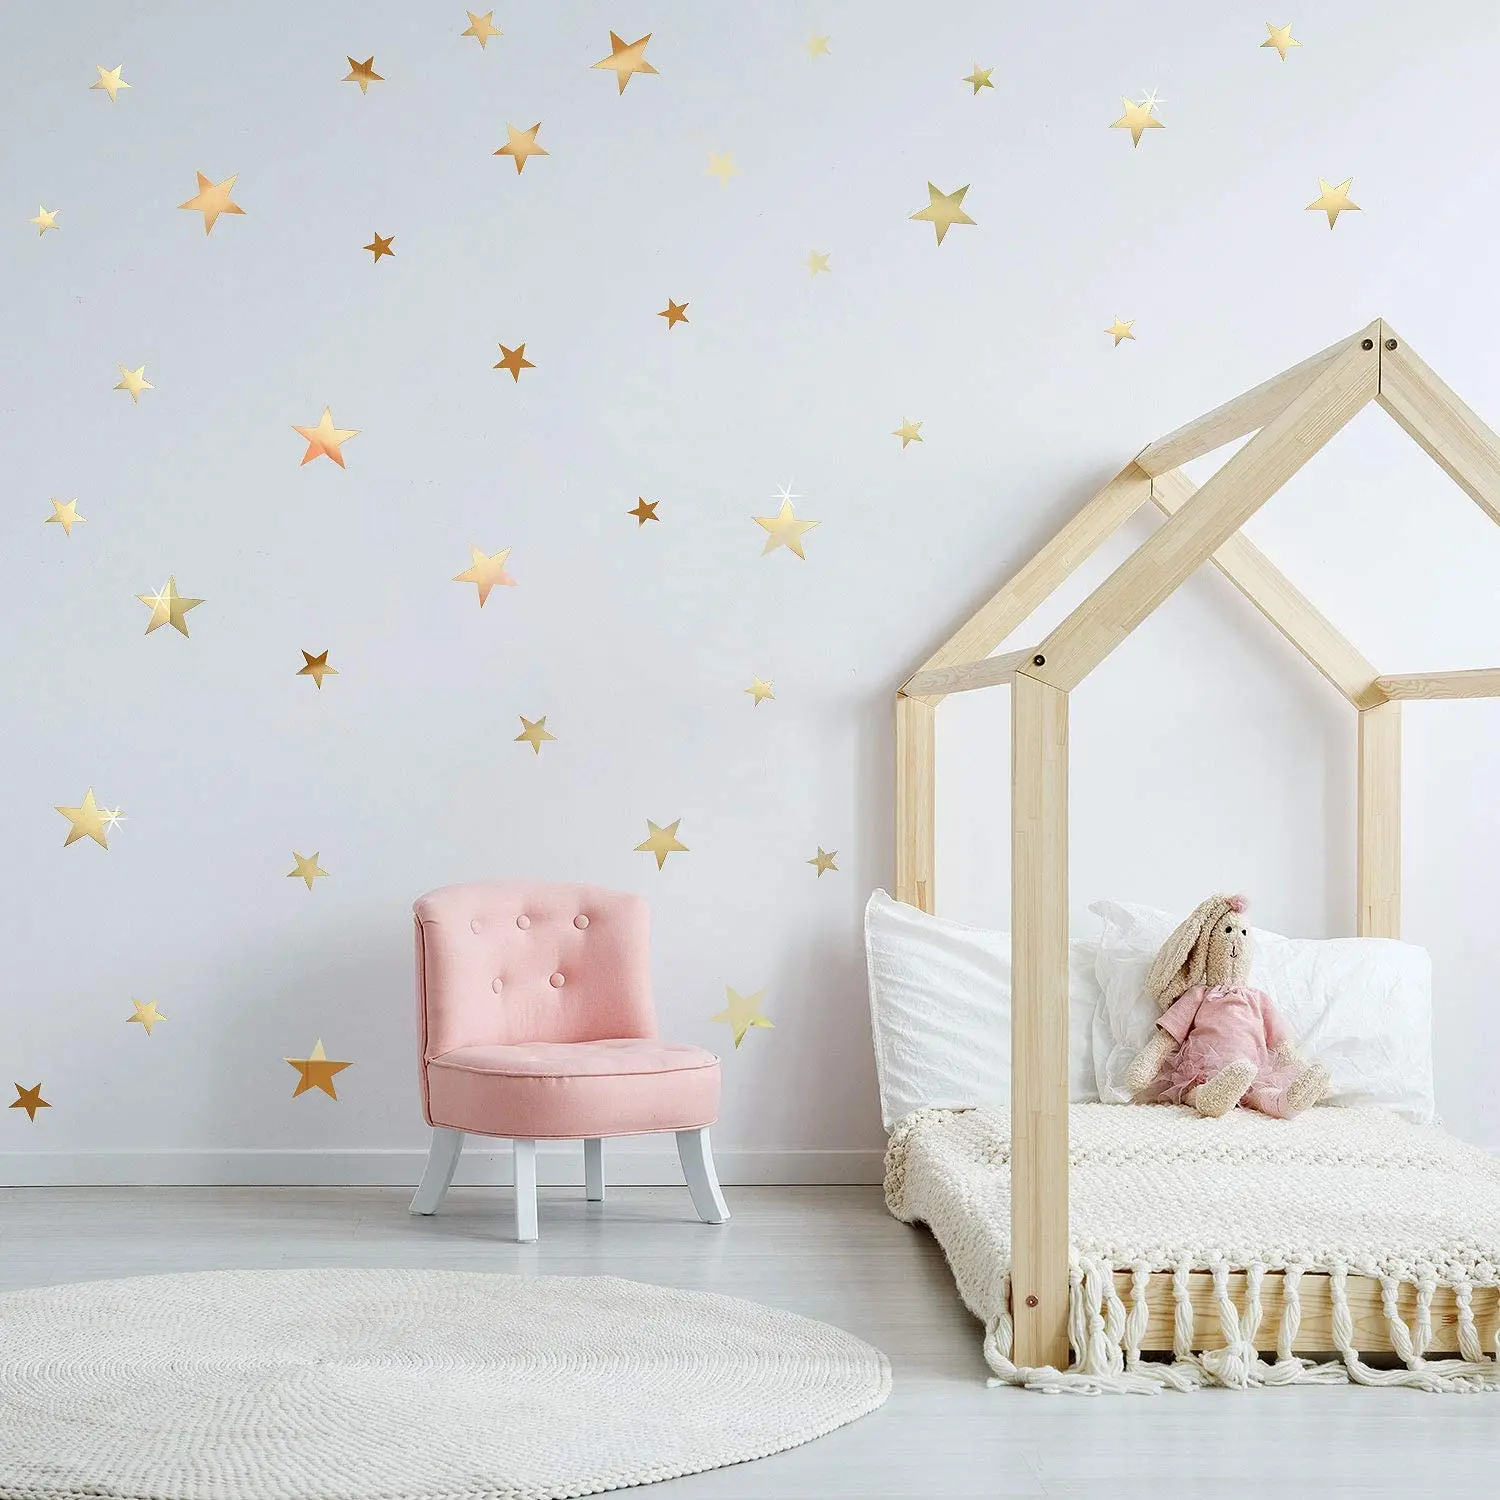 New Star Acrylic Mirror Sticker Decoration Wall DIY 3D Pentagram Sticker Living Room Bedroom Kids Room Decor images - 6